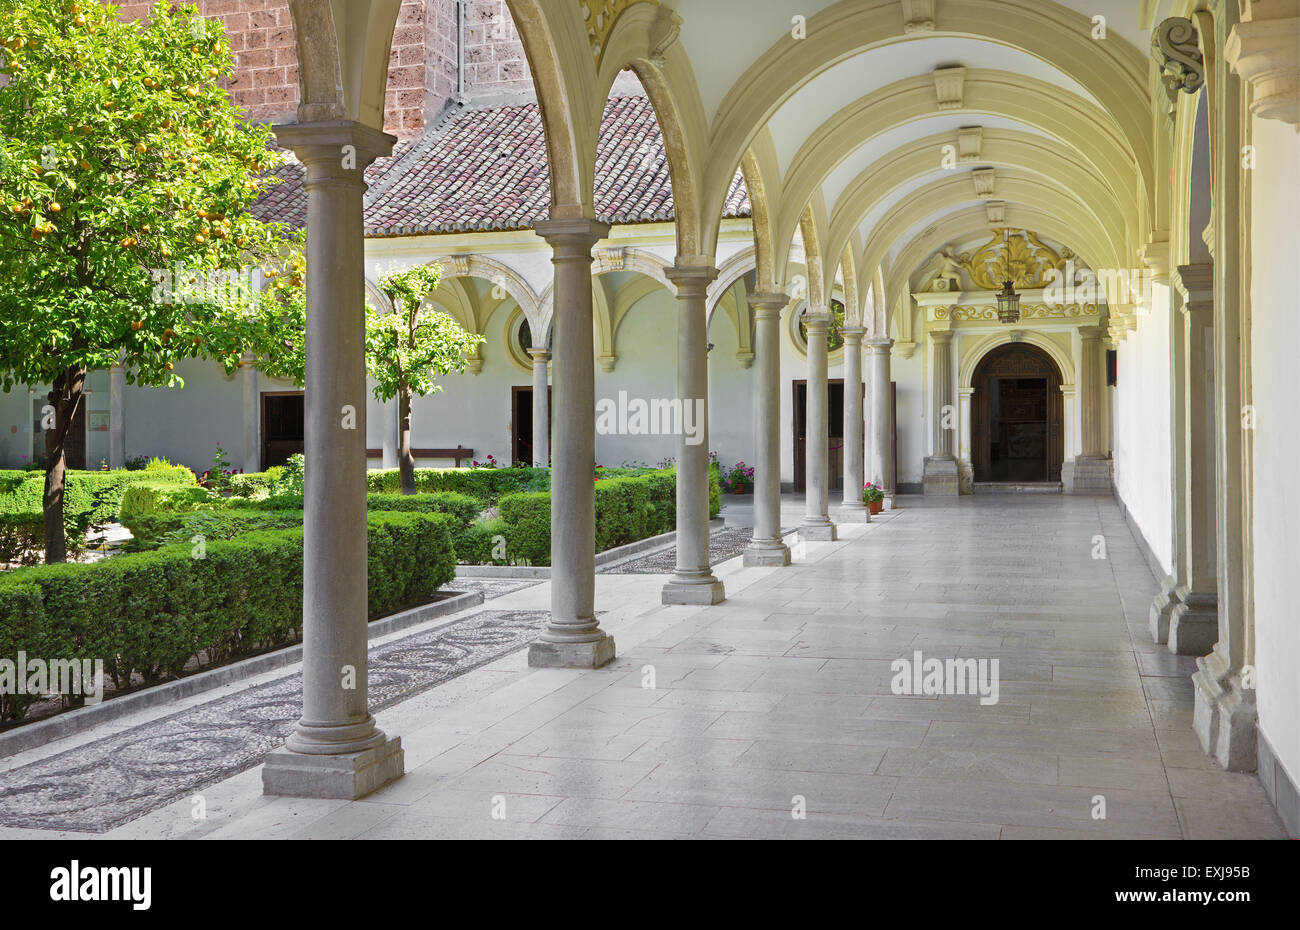 GRANADA, SPAIN - MAY 31, 2015: The atrium of church Monasterio de la Cartuja. Stock Photo